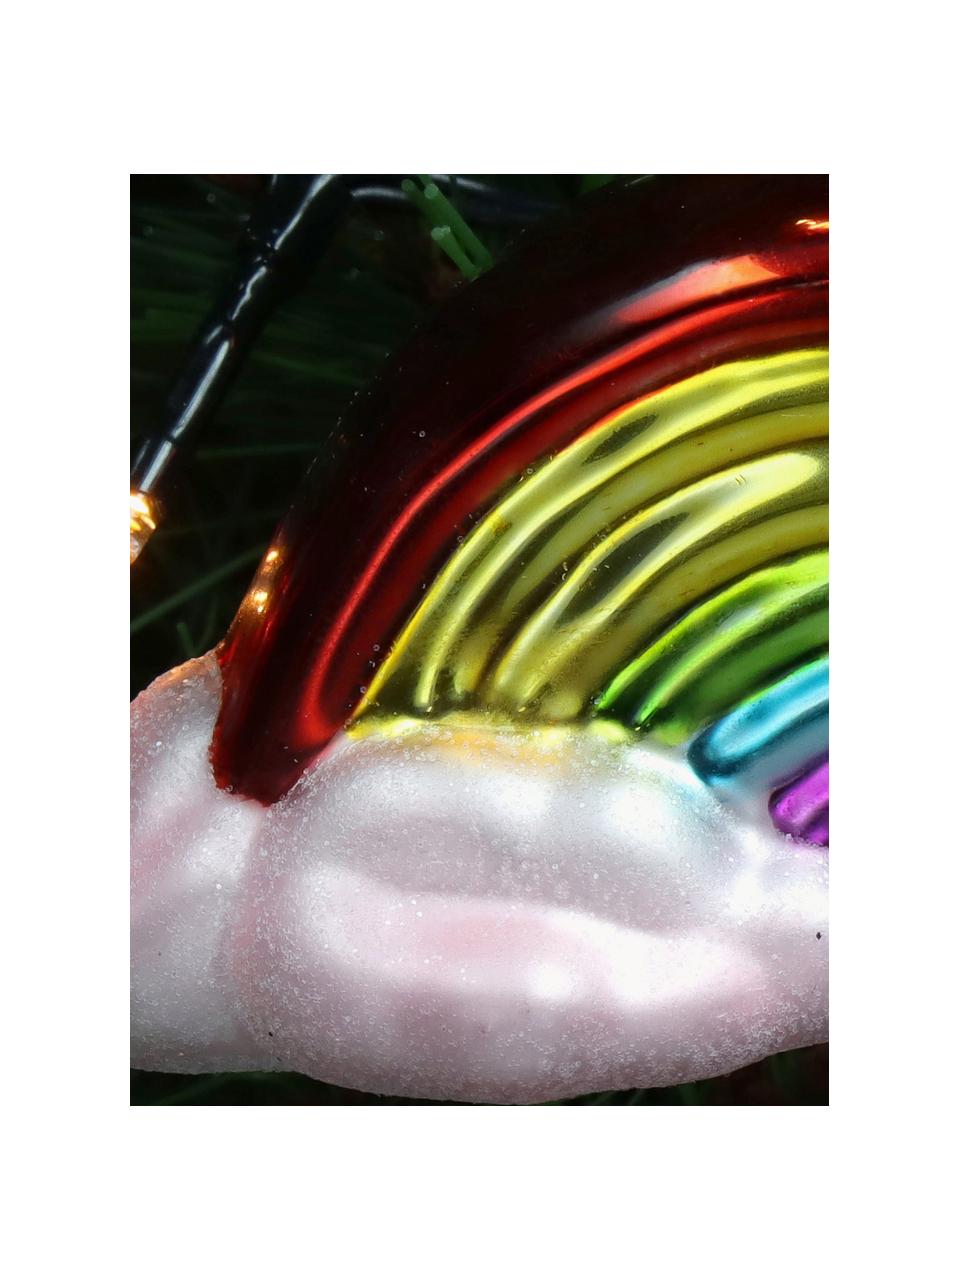 Ozdoba na vánoční stromeček Rainbow, Sklo, Více barev, Š 11 cm, V 6 cm